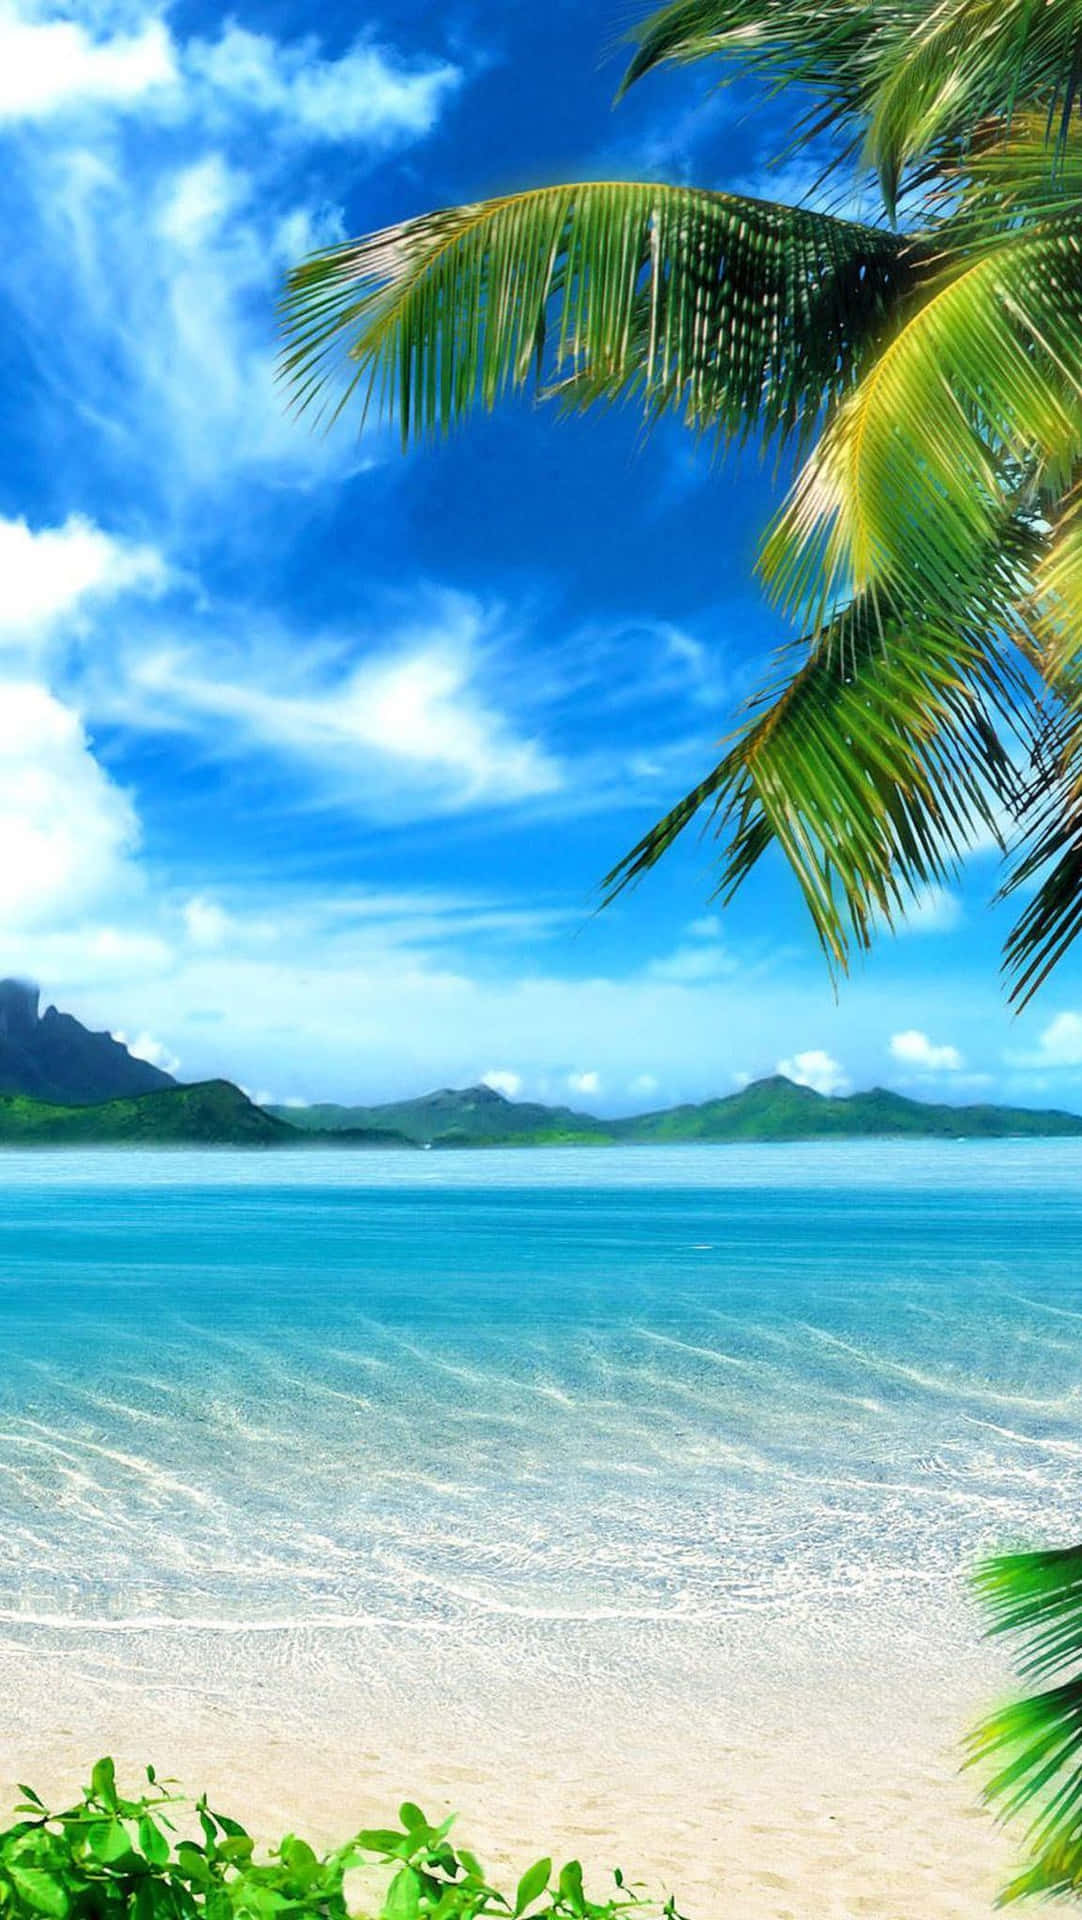 Nyd en perfekt dag i paradis på en tropisk ø. Wallpaper